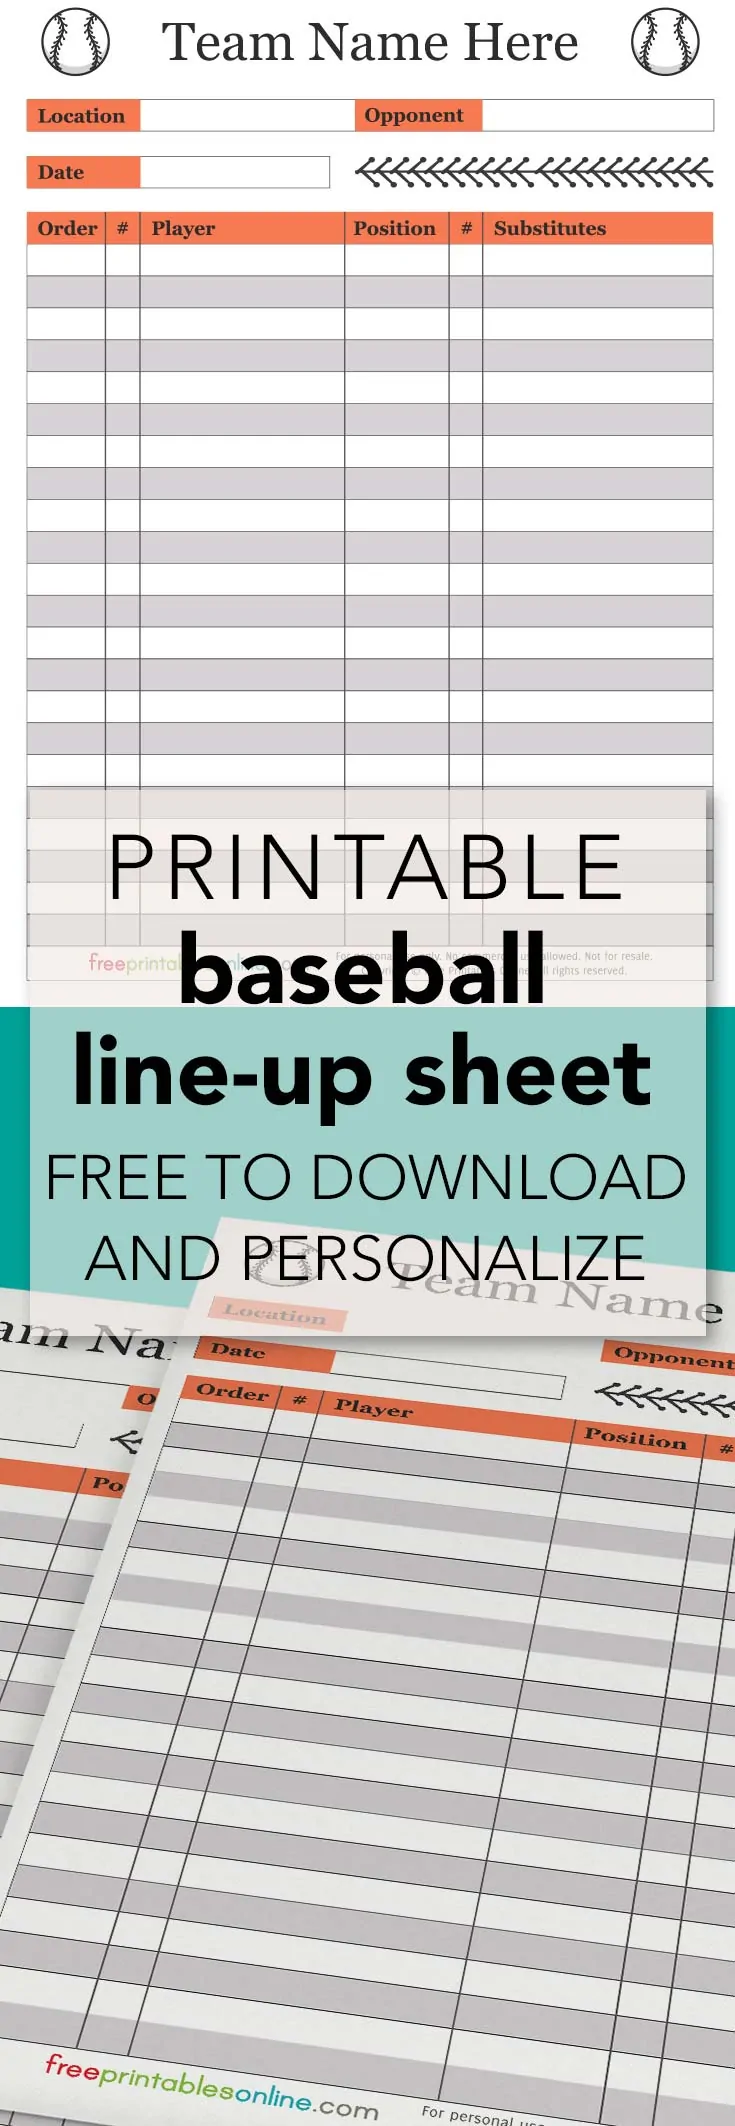 Printable Baseball Lineup Sheet Free Printables Online